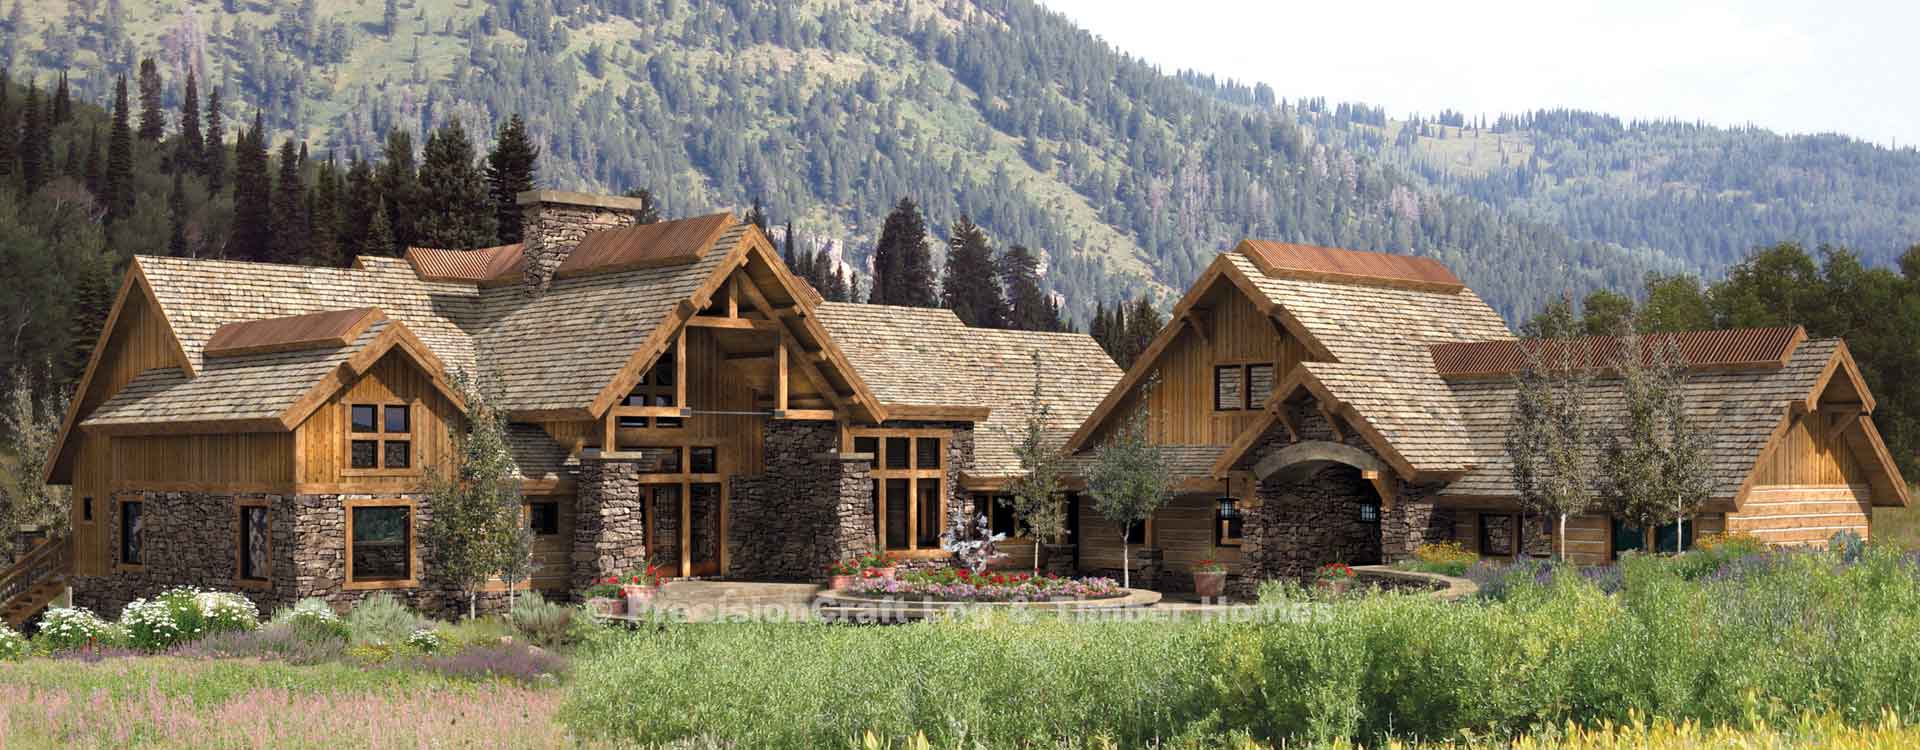 Coeur d'Alene Lodge | Luxury Timber Frame Home Plan